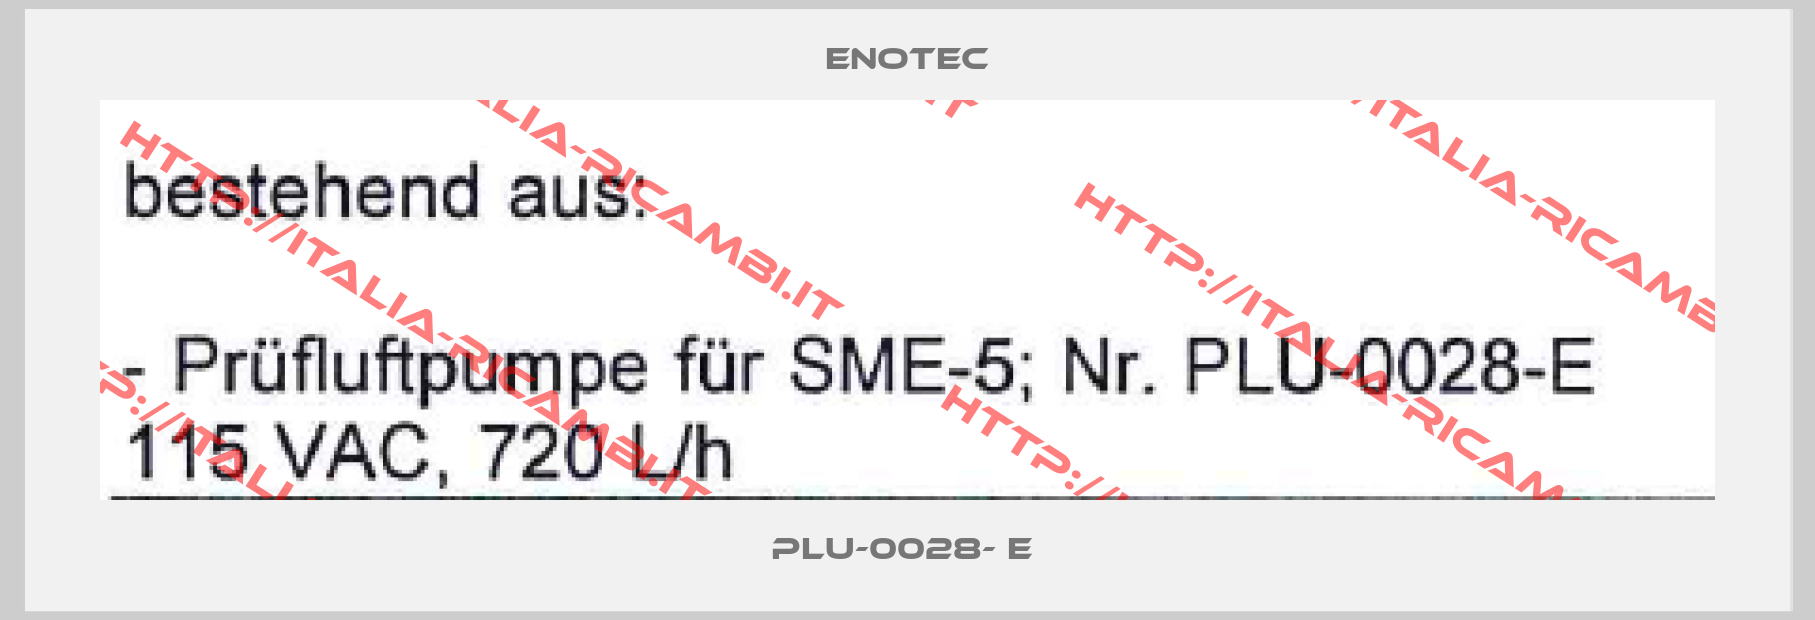 Enotec-PLU-0028- E 